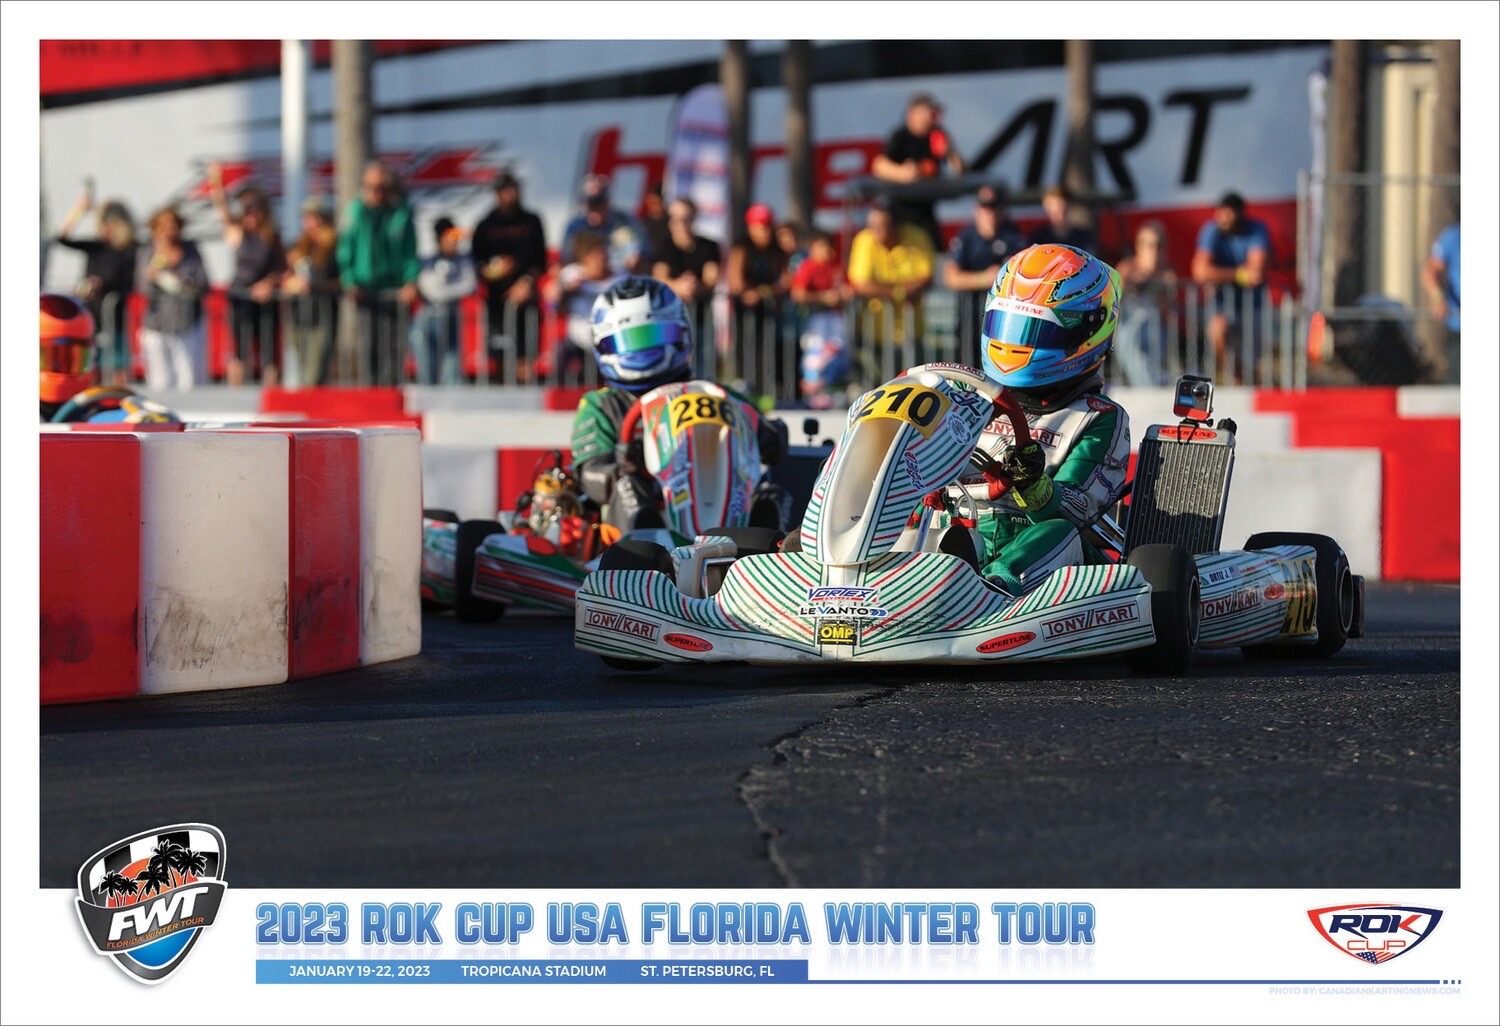 Florida Winter Tour ROK Cup USA